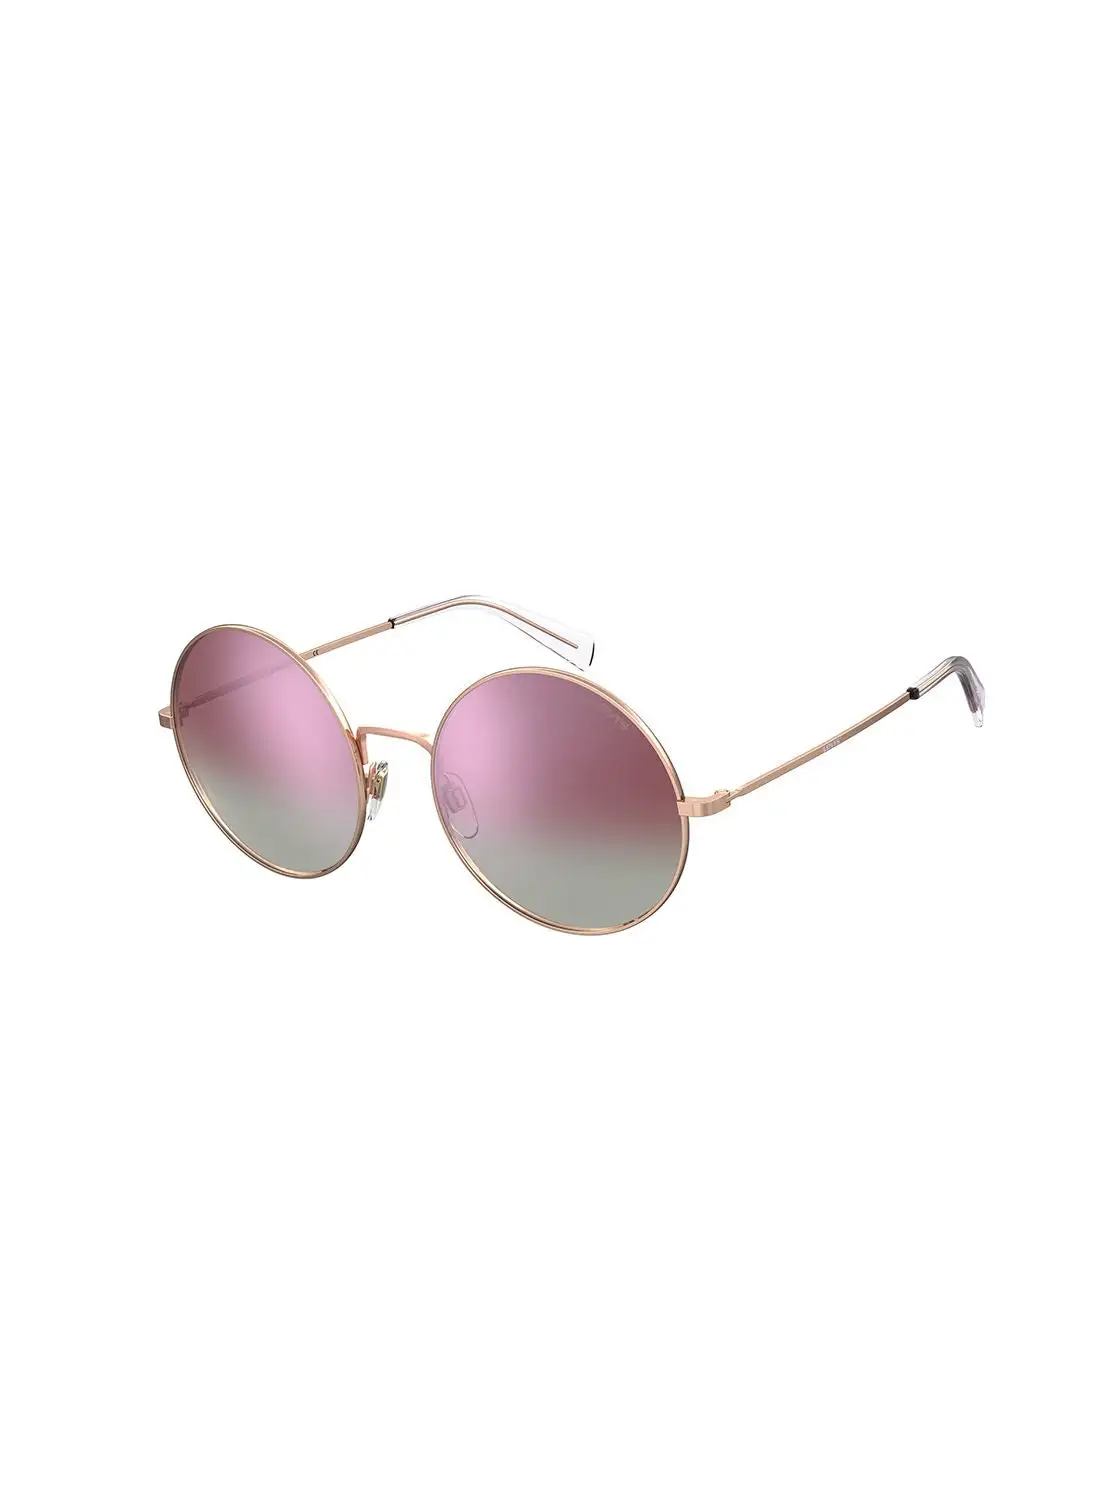 Levi's Women's UV Protection Round Sunglasses - Lv 1011/S Gold Copp 55 - Lens Size: 55 Mm